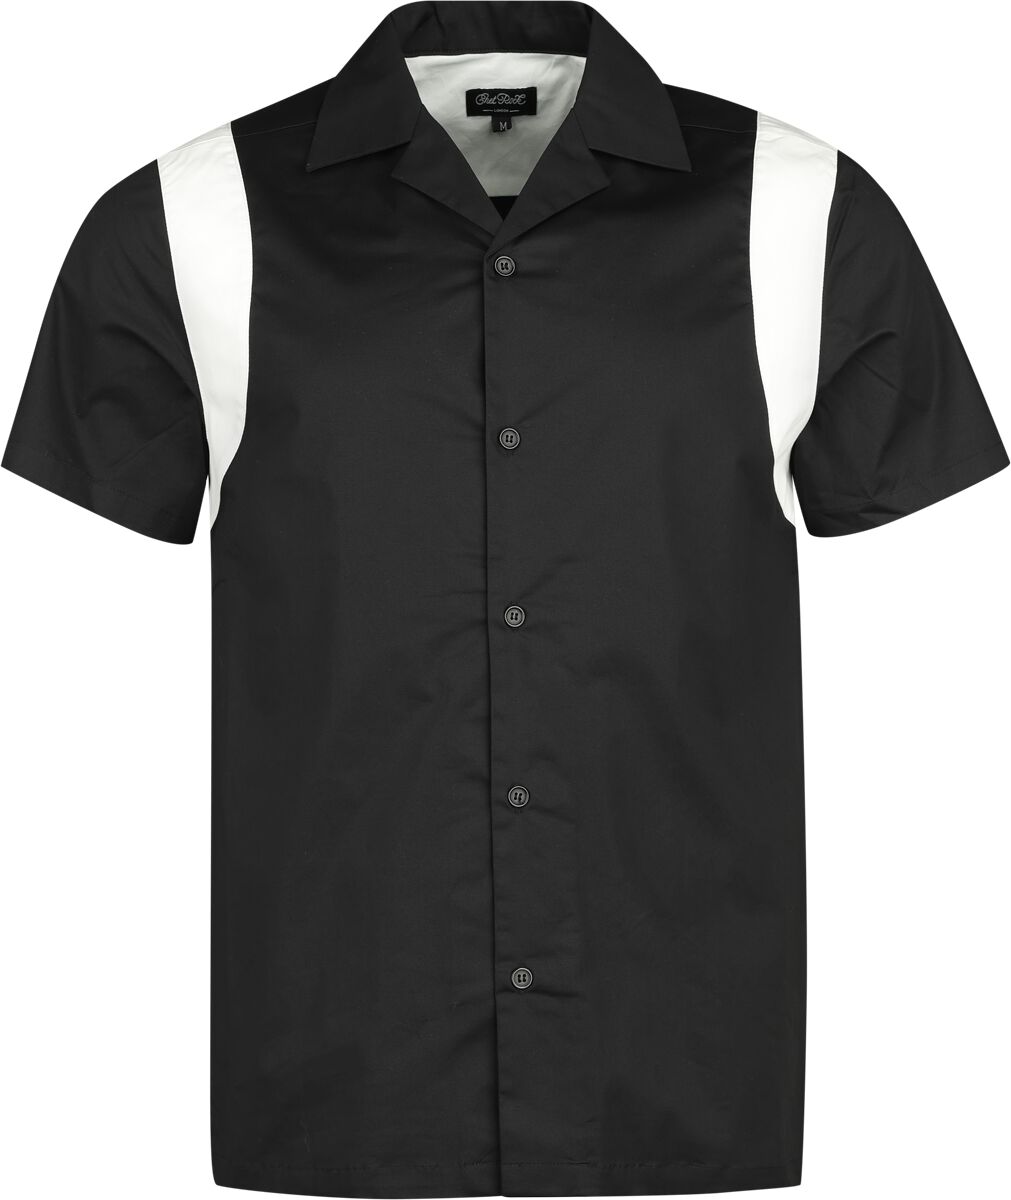 Image of Camicia Maniche Corte Rockabilly di Chet Rock - Marty bowling shirt - S a XL - Uomo - nero/bianco